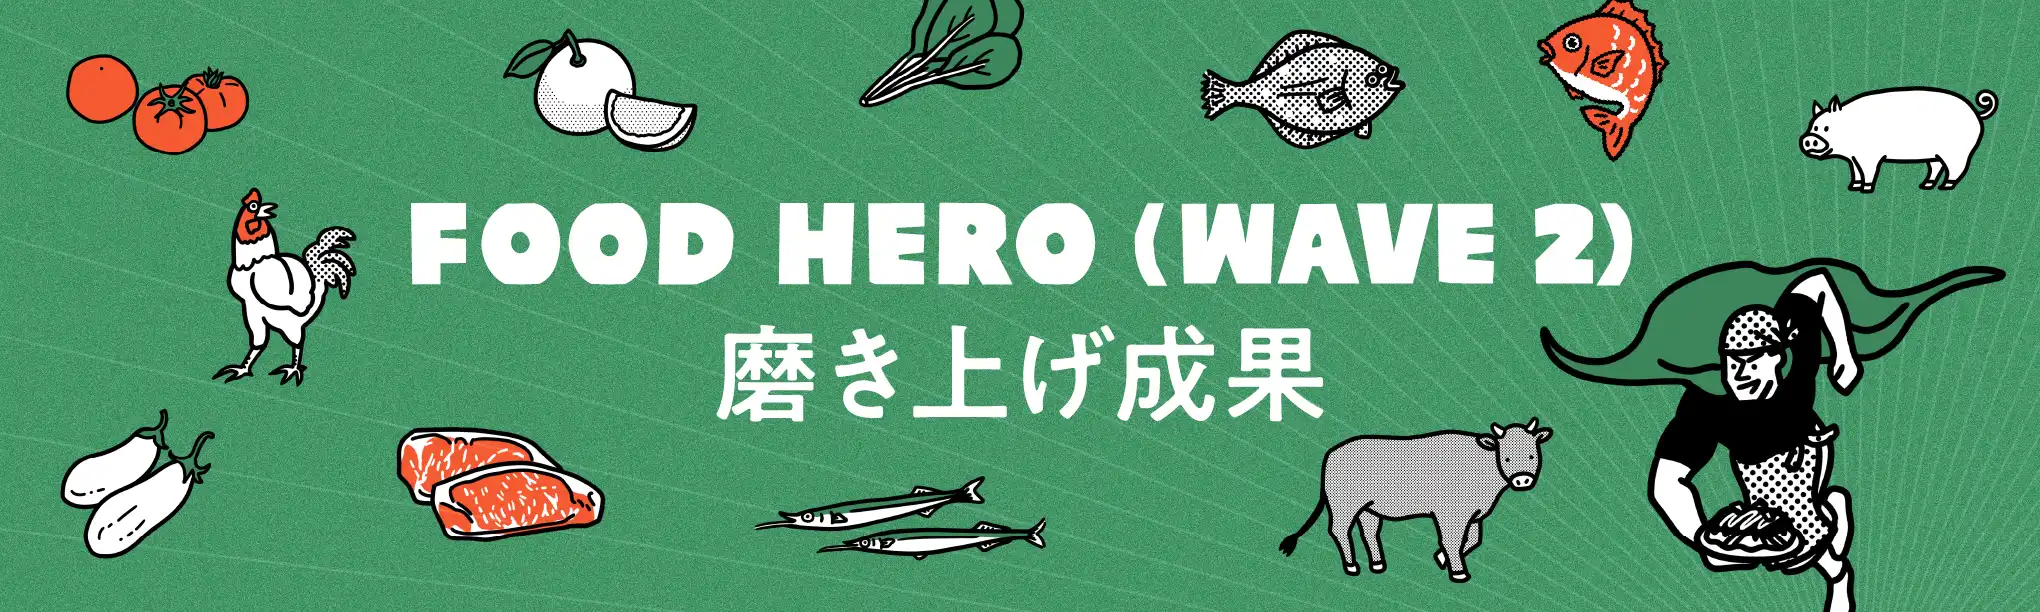 FOOD HERO(WAVE 2)磨き上げ成果